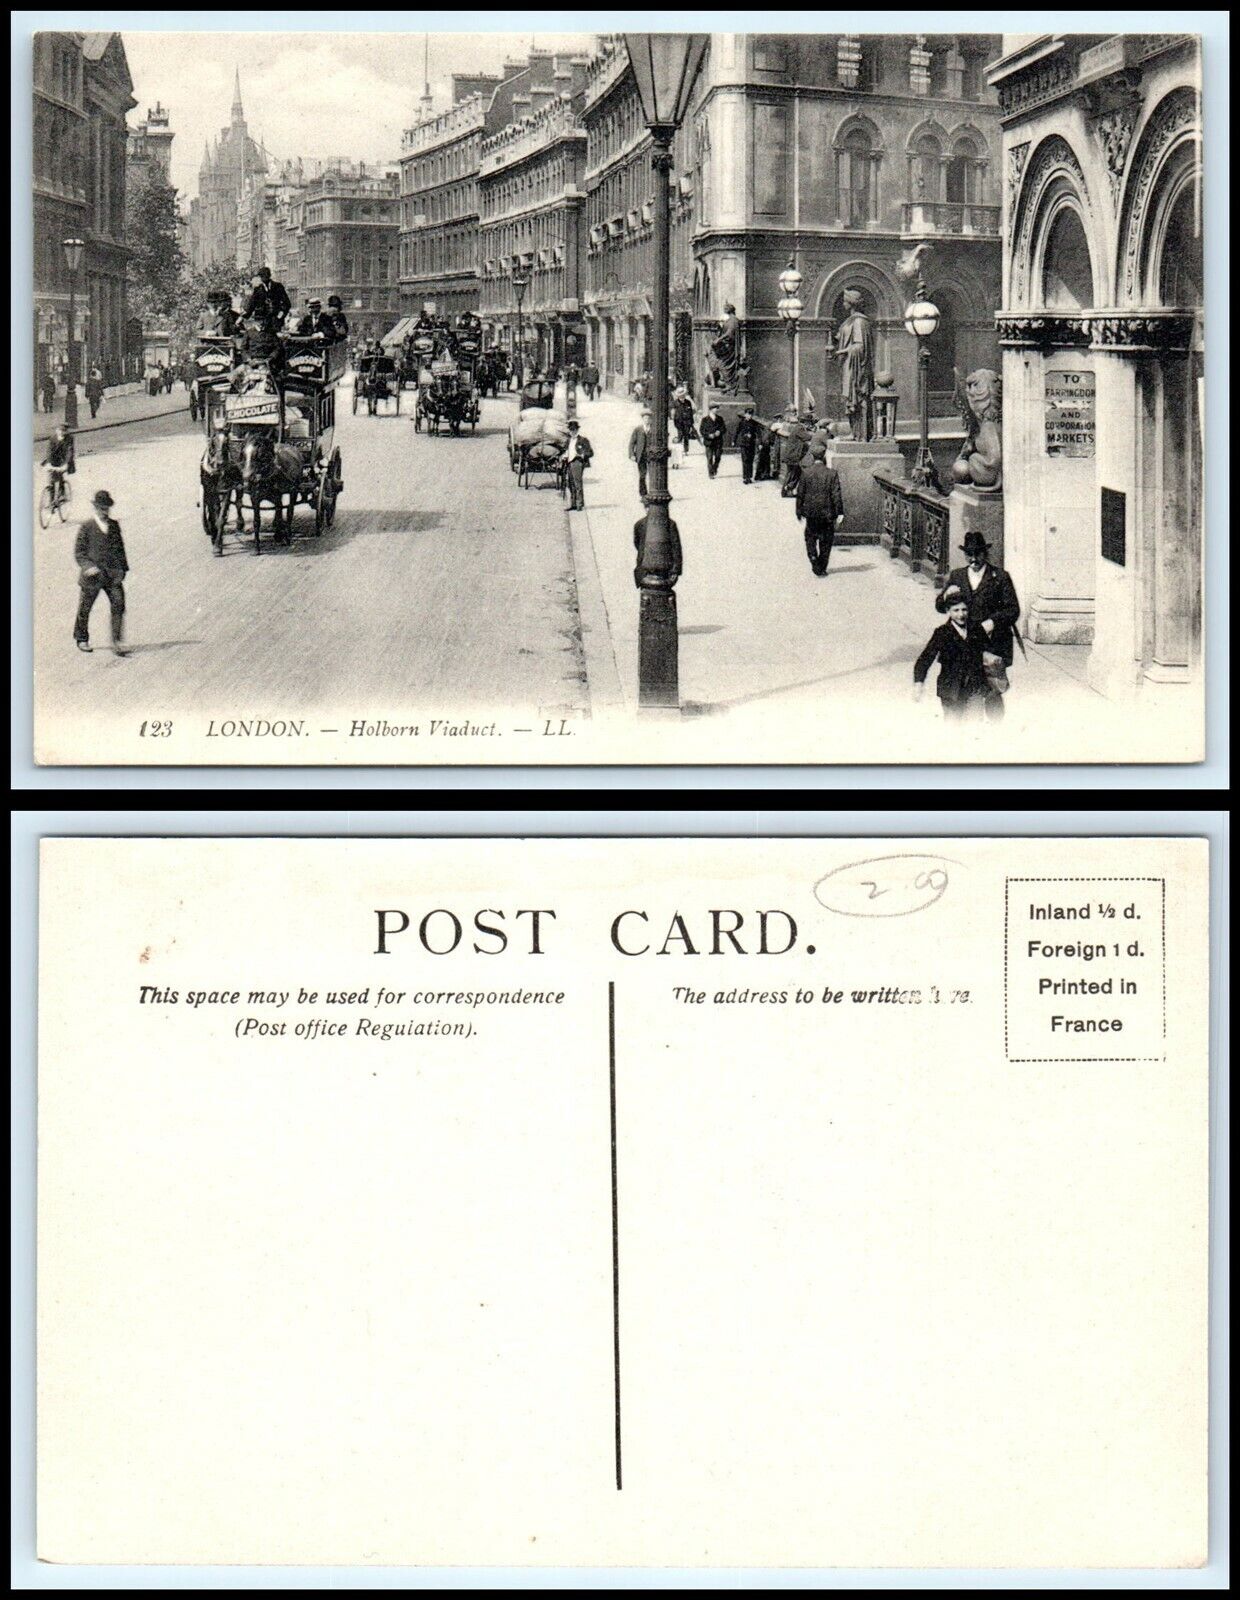 UK Postcard - London, Holborn Viaduct CJ